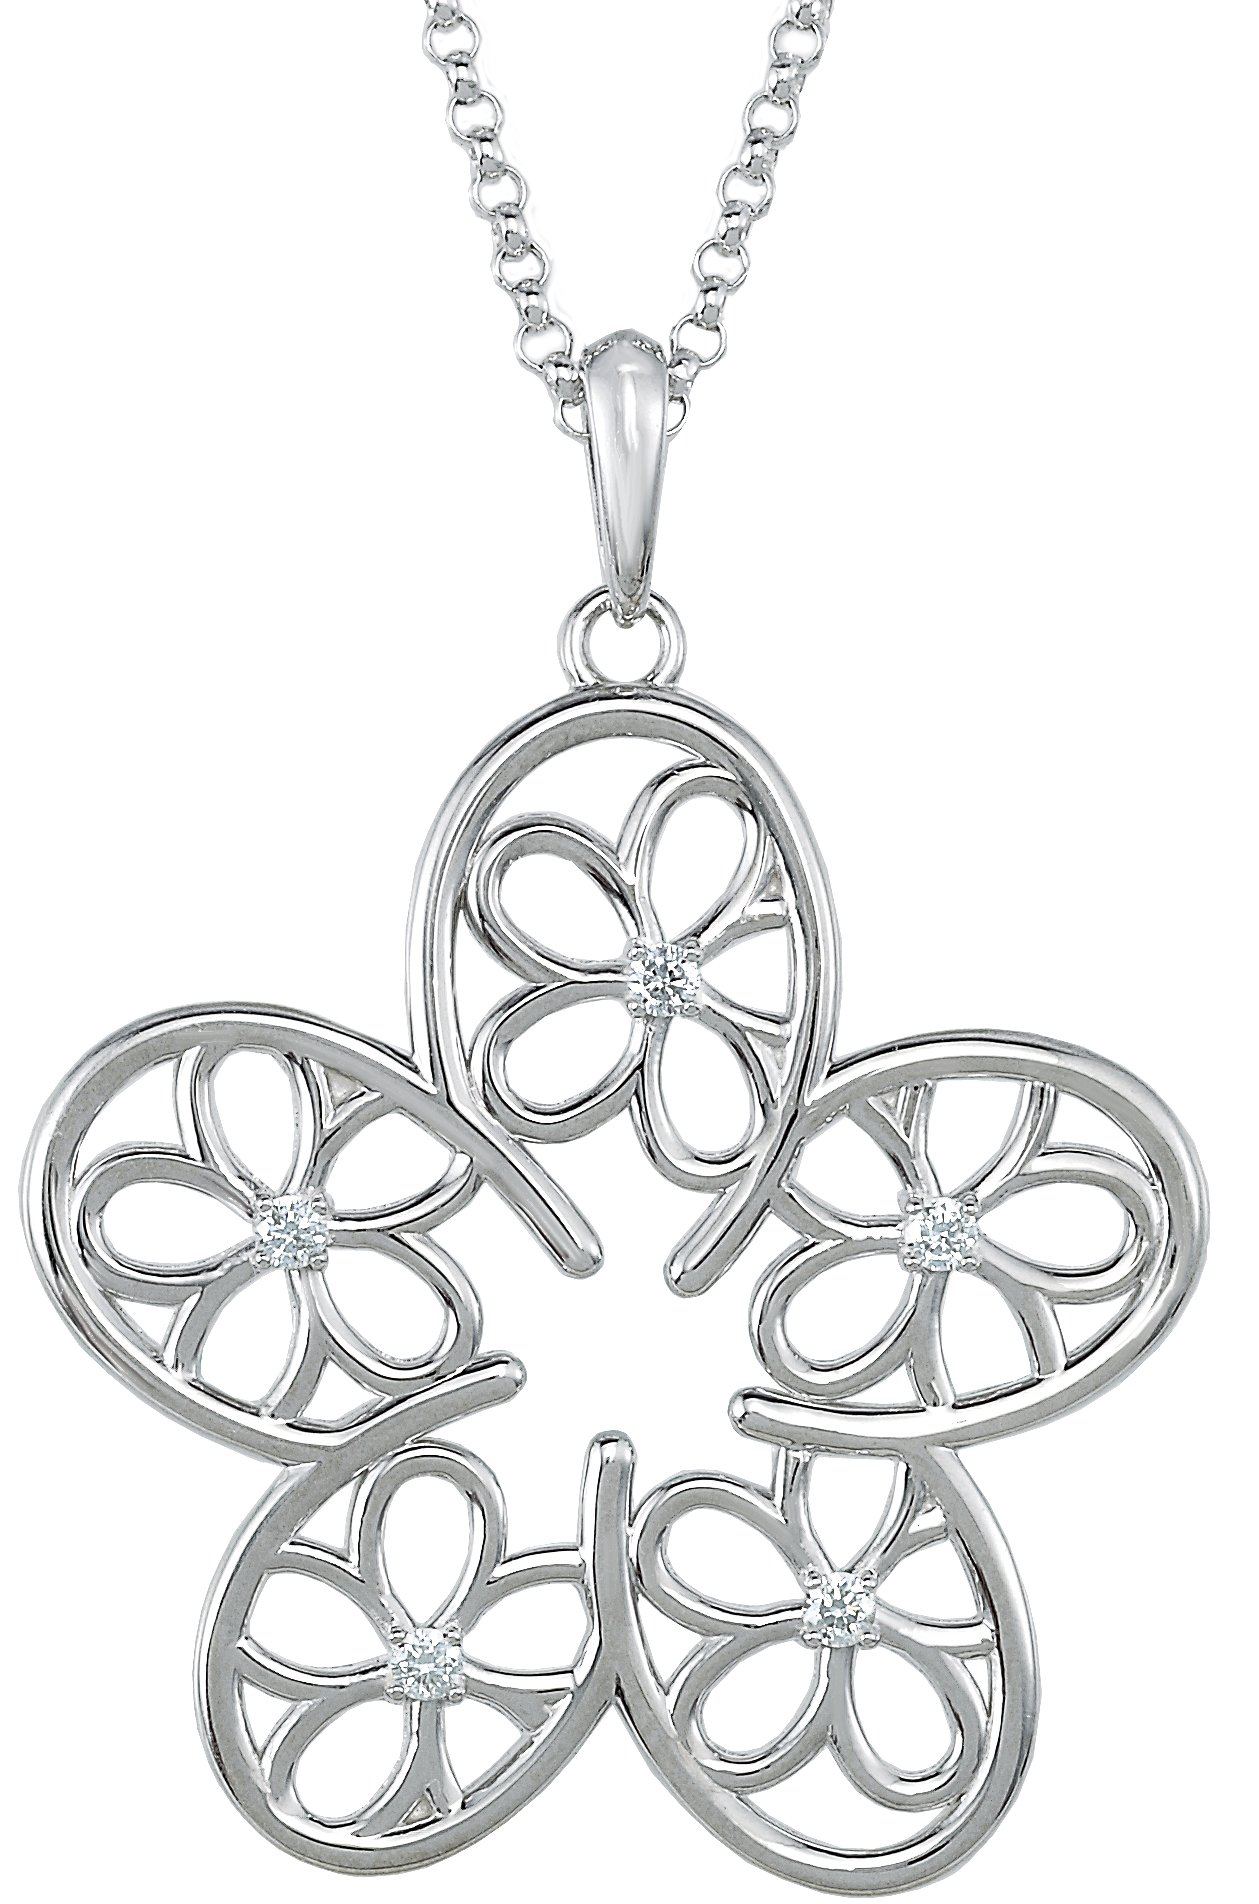 Floral Design Pendant or Necklace